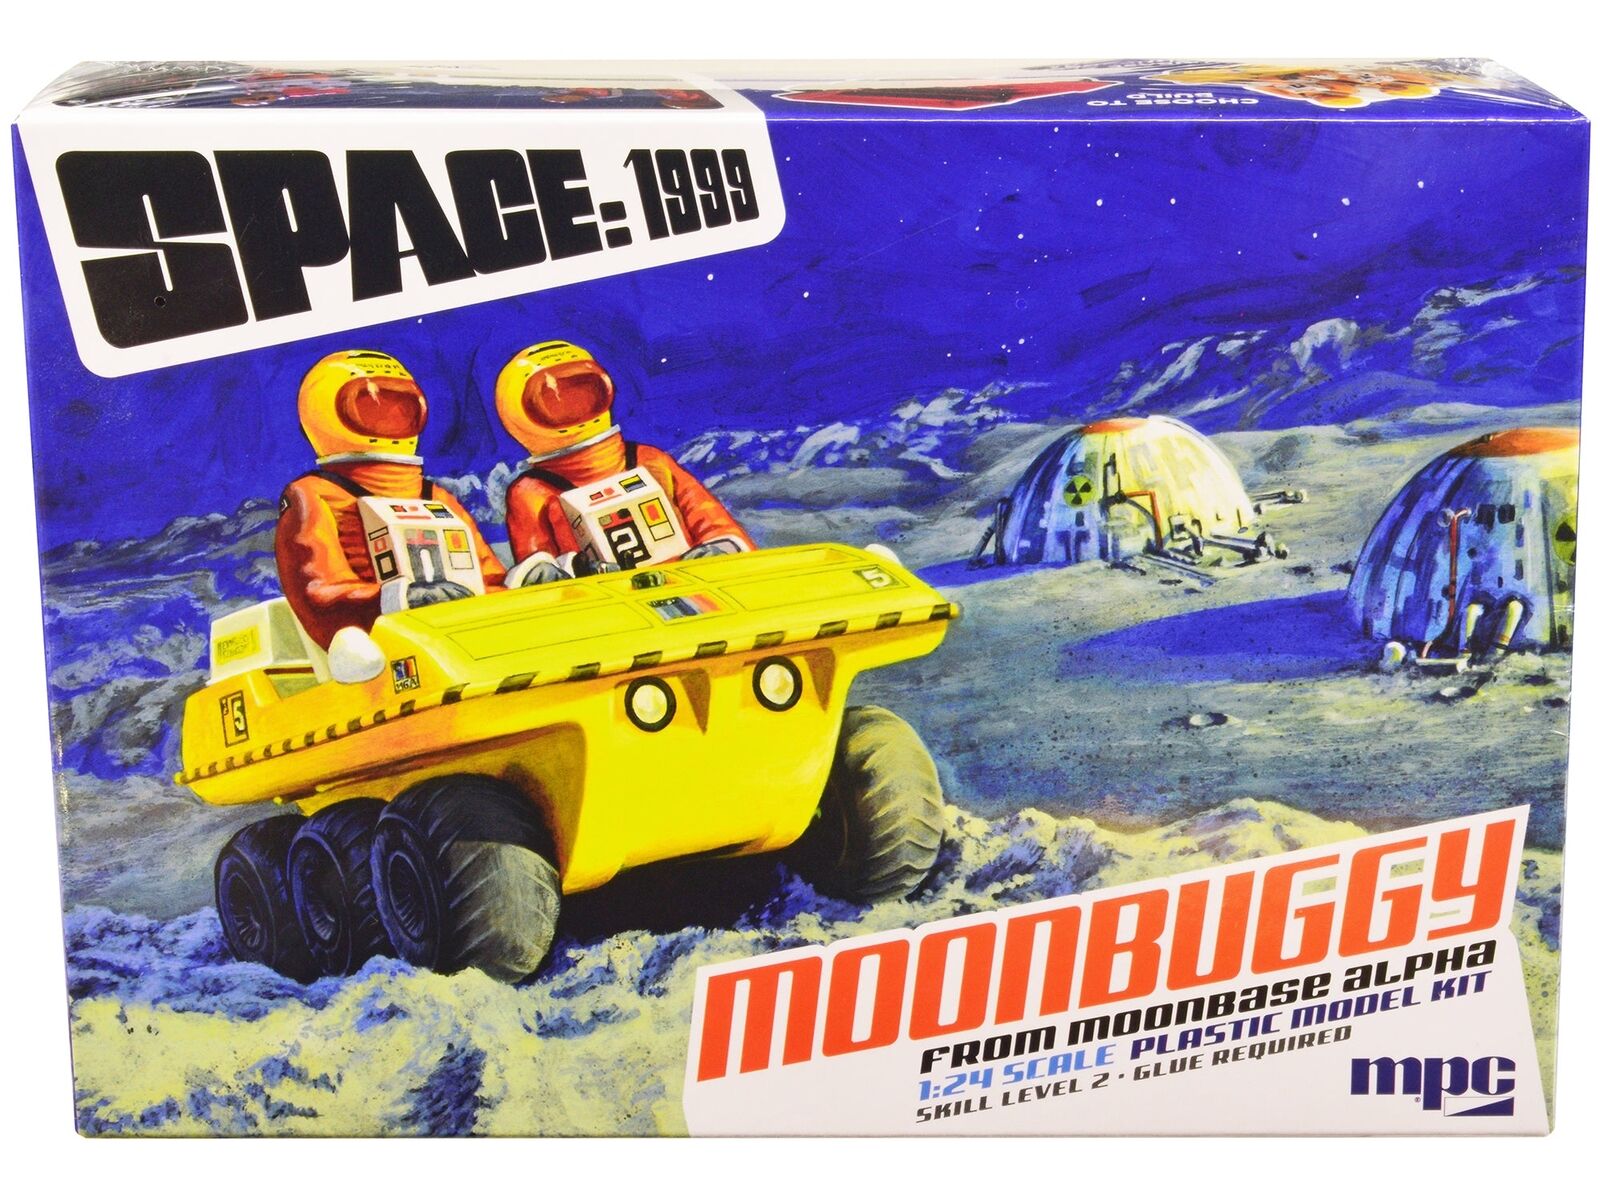 Moonbuggy/Amphicat - ATV Space 1999 1975-1977 Show -- Model Kit 1/24